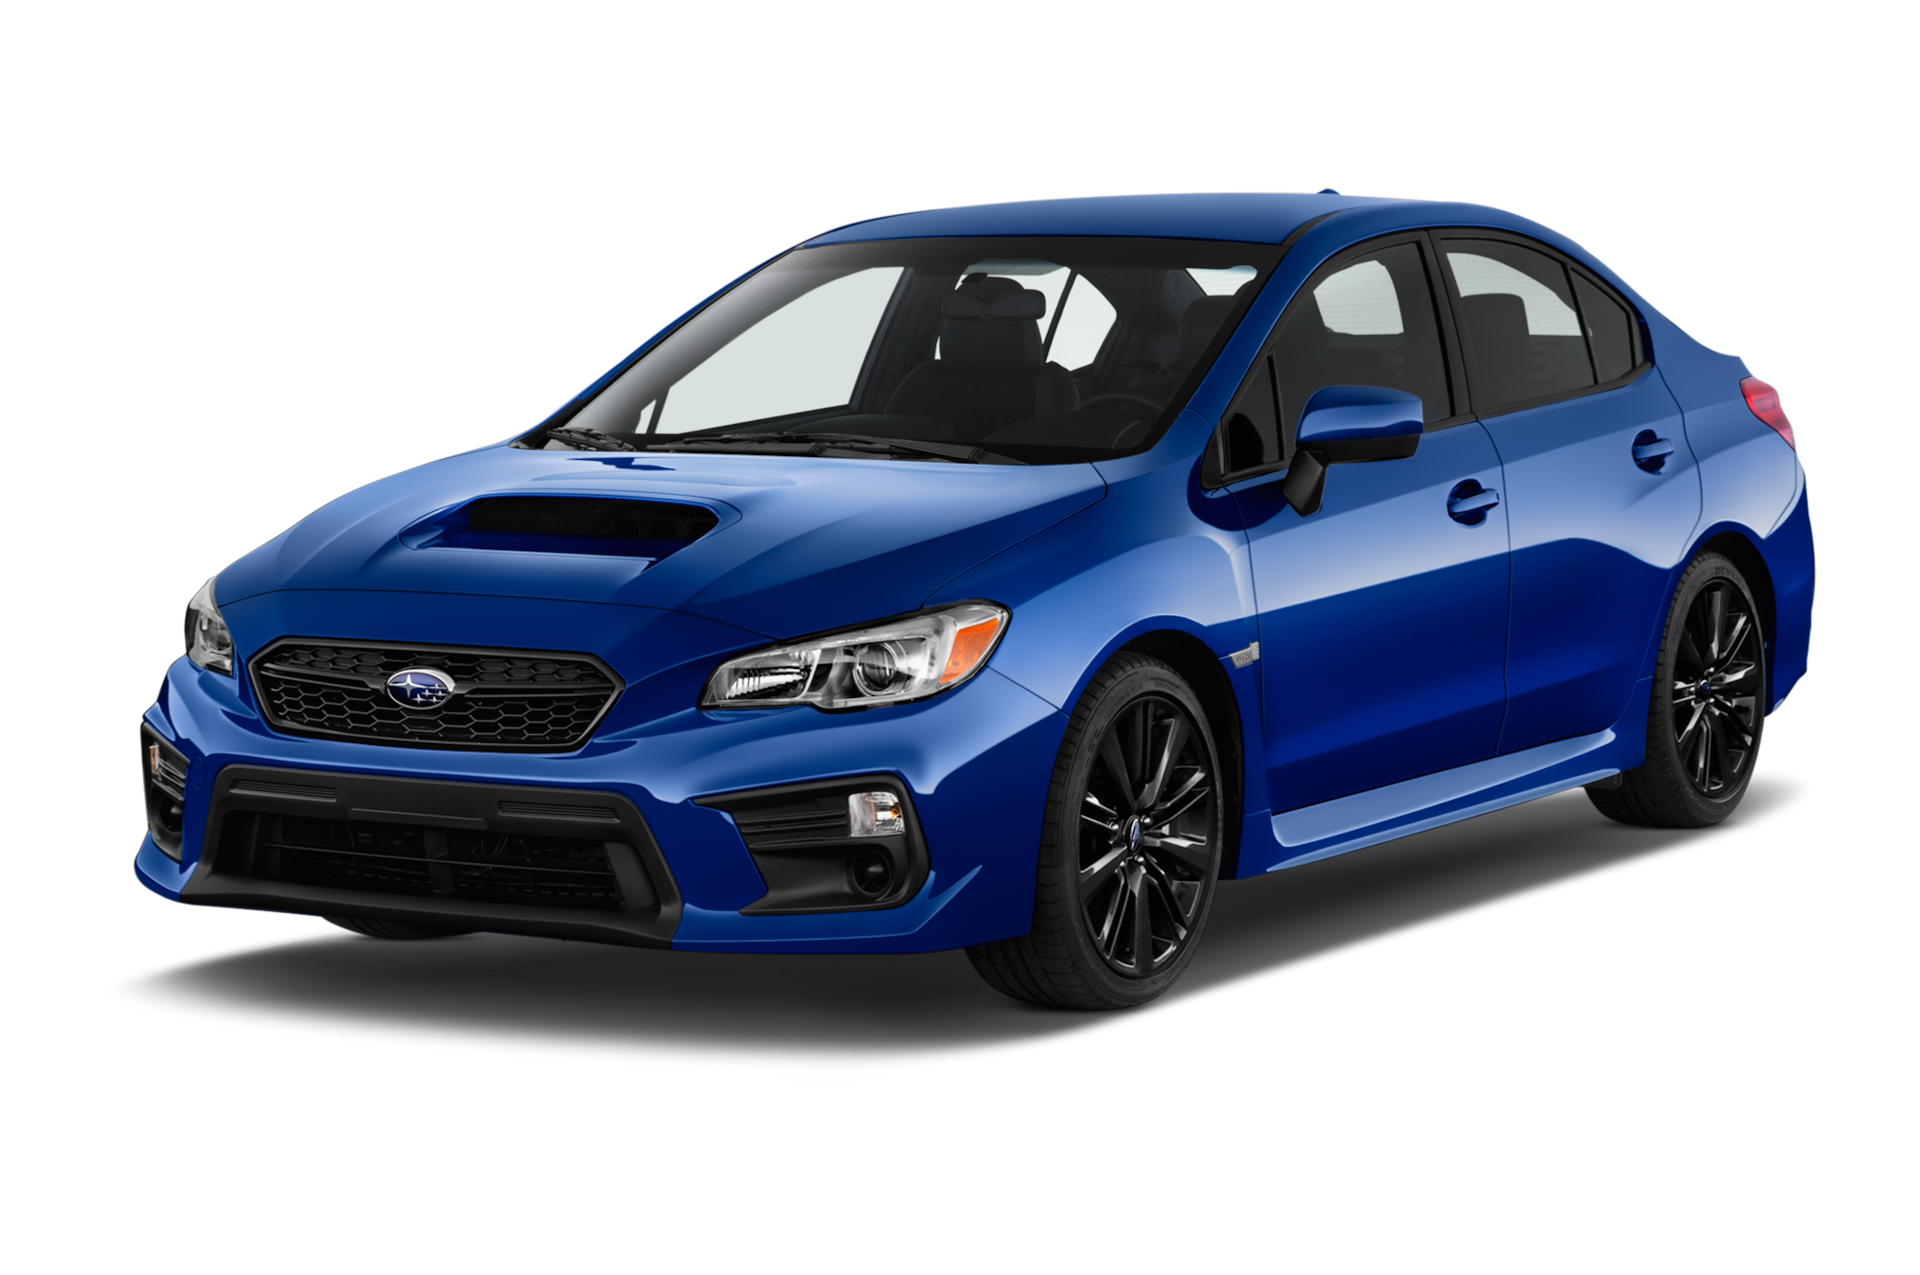 2018 Subaru WRX Prices, Reviews, and Photos - MotorTrend